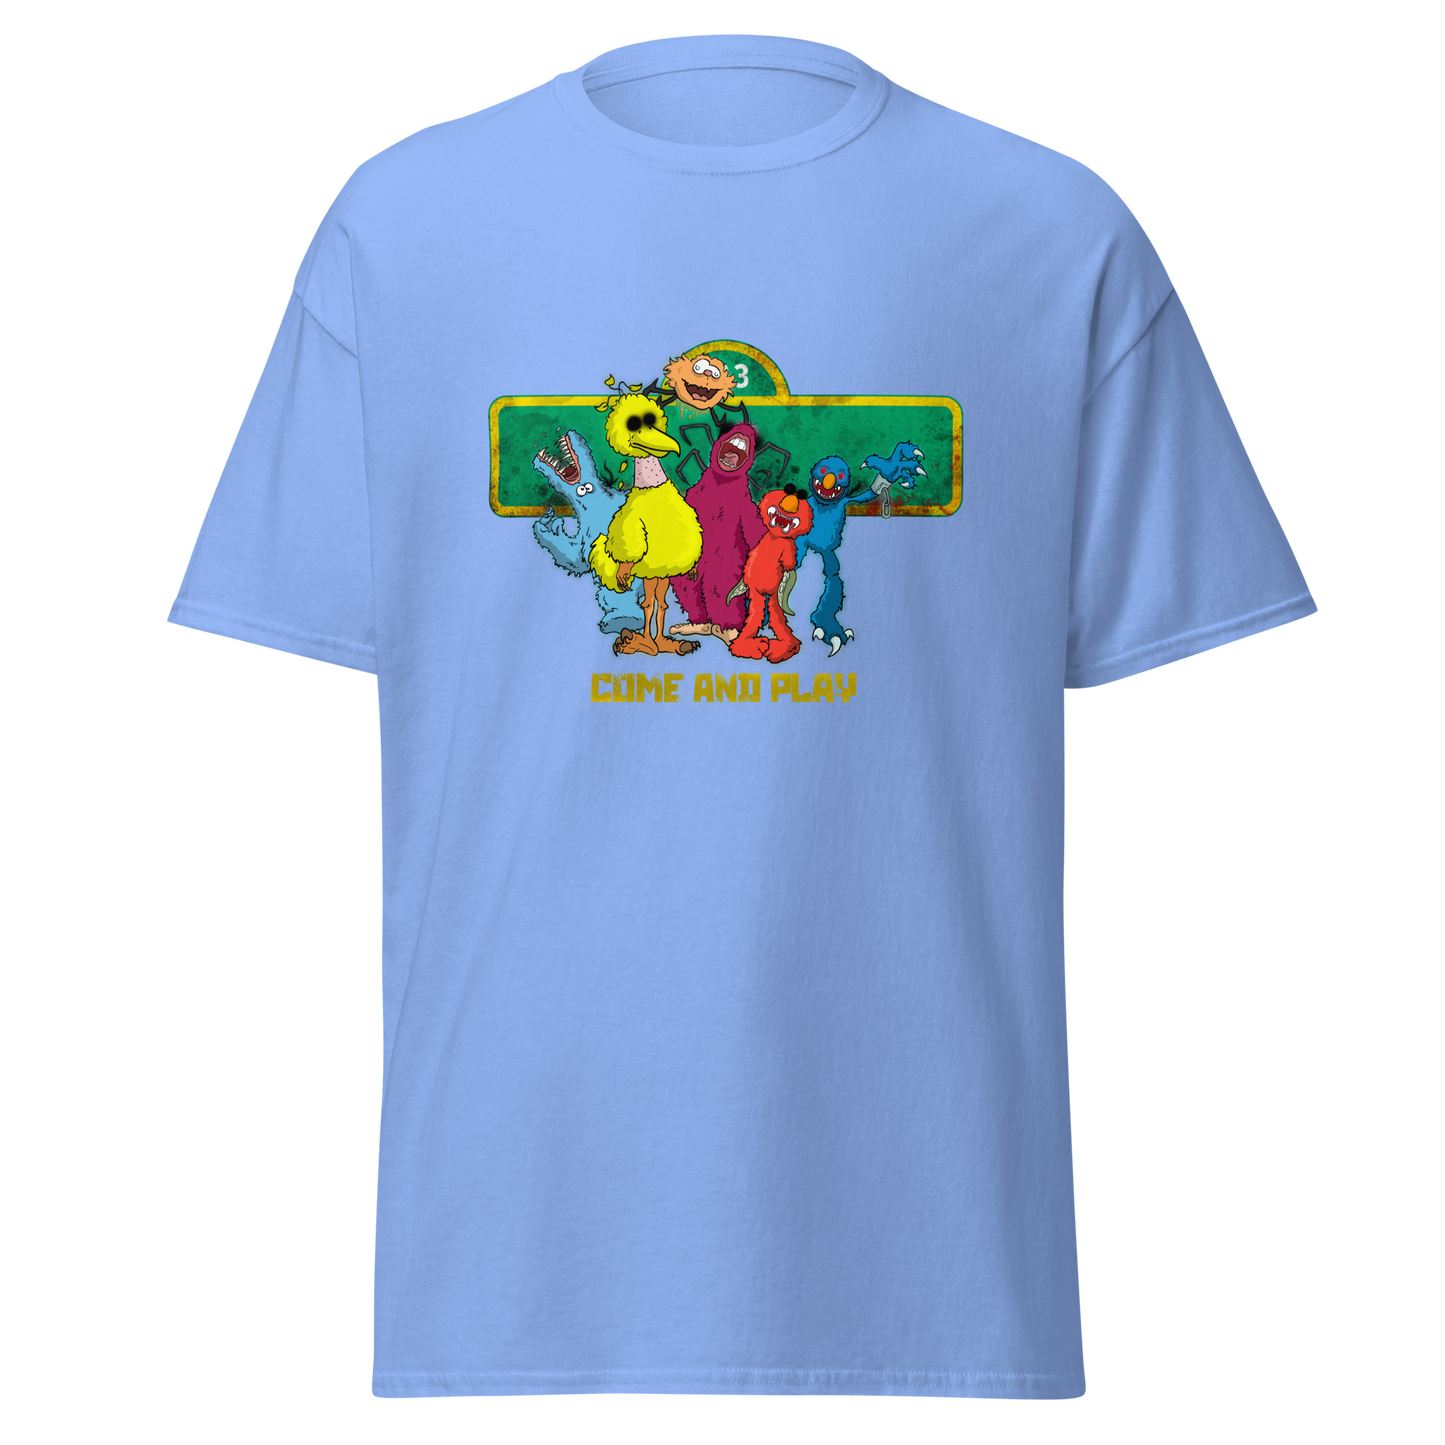 Cursed Sesame Street T-Shirt